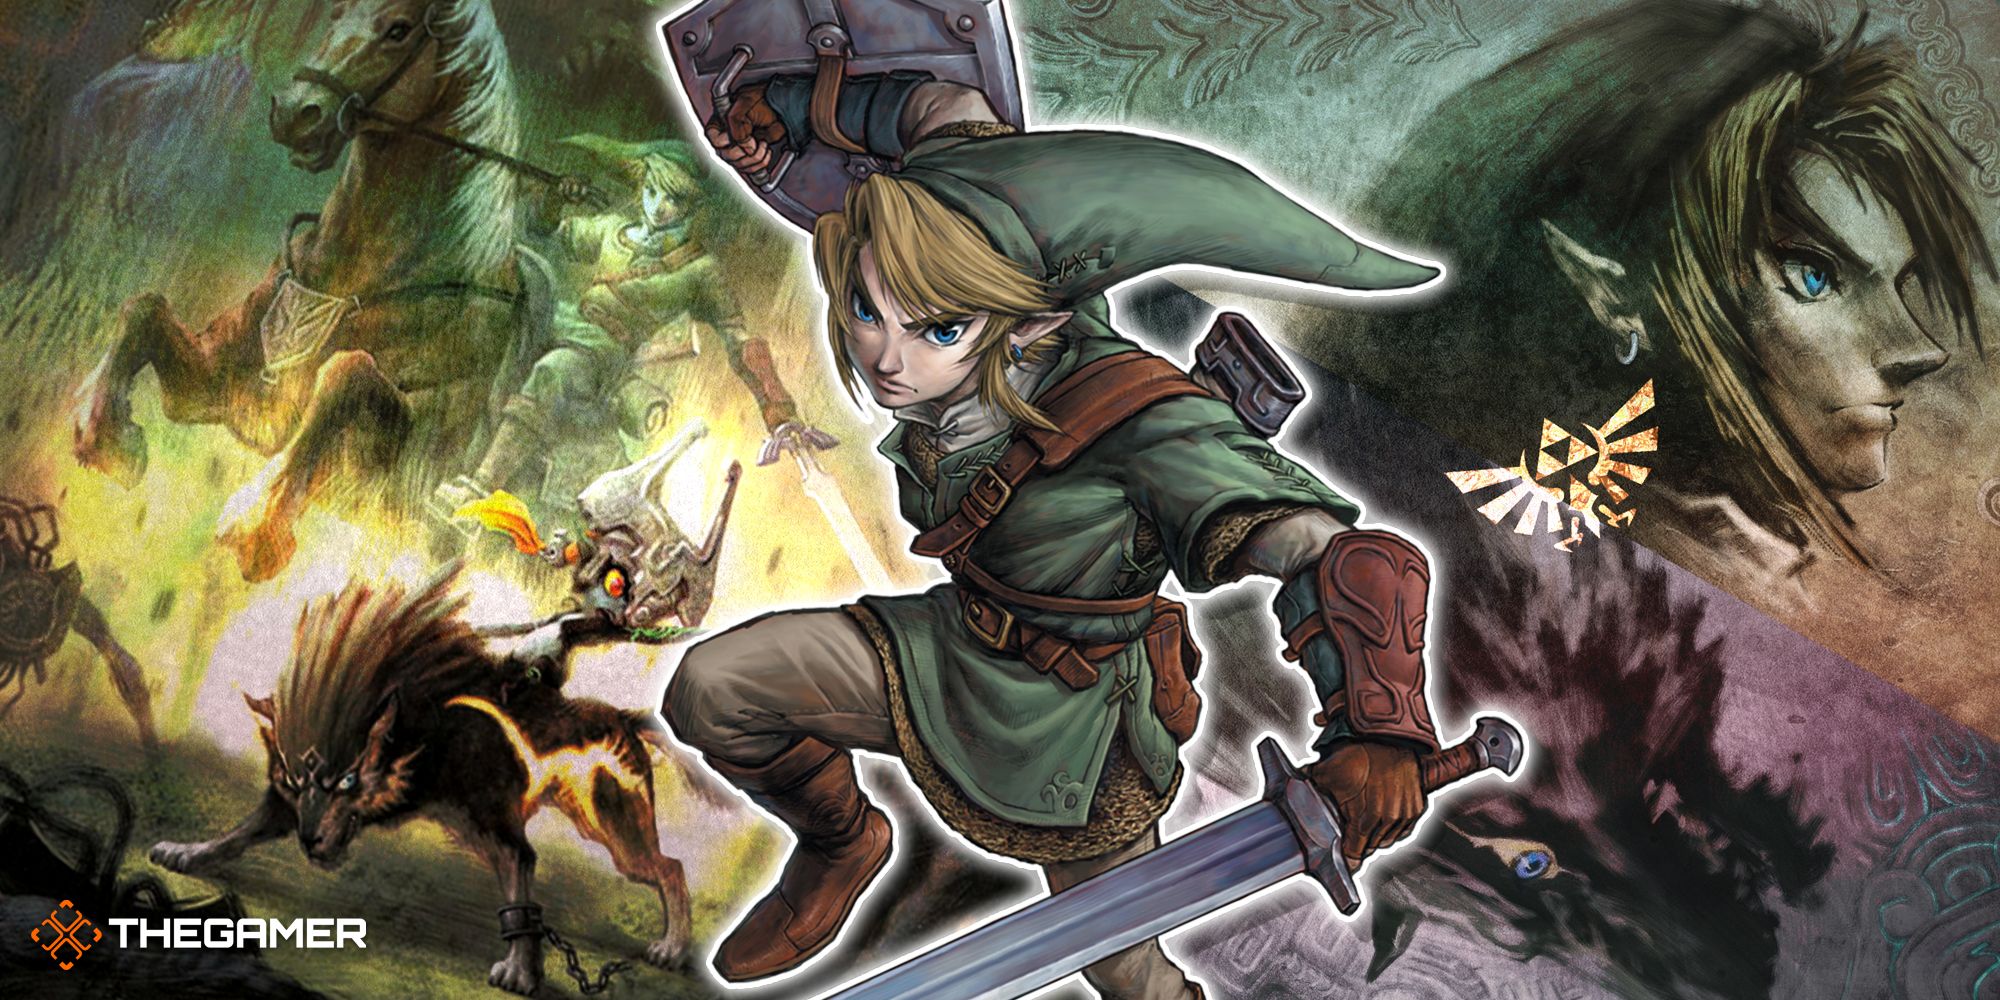 Game art from The Legend of Zelda Twilight Princess.